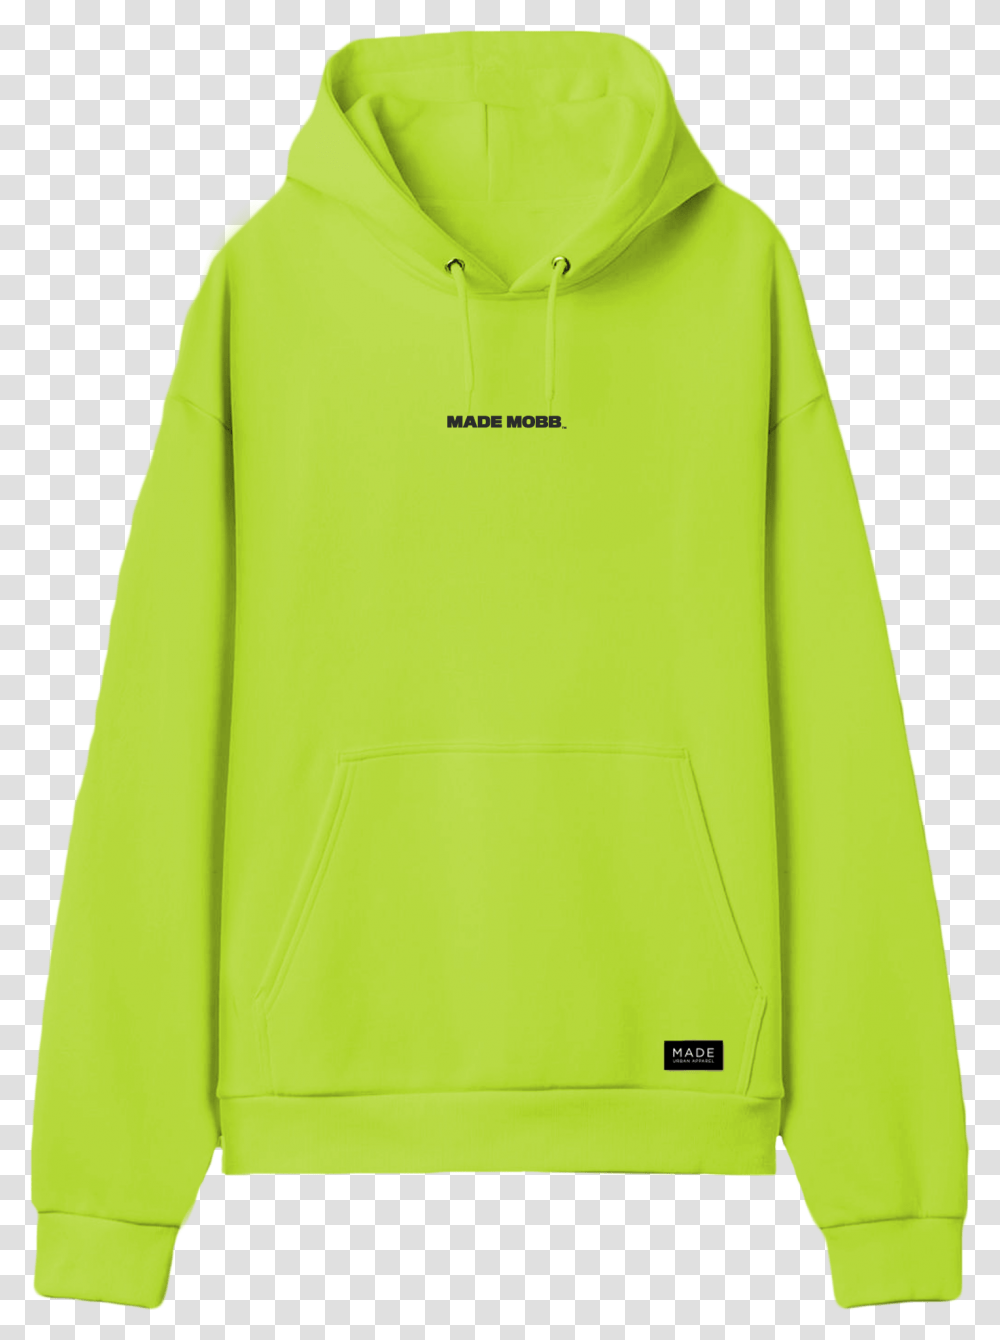 Neon Yellow Hoodie, Apparel, Sweatshirt, Sweater Transparent Png